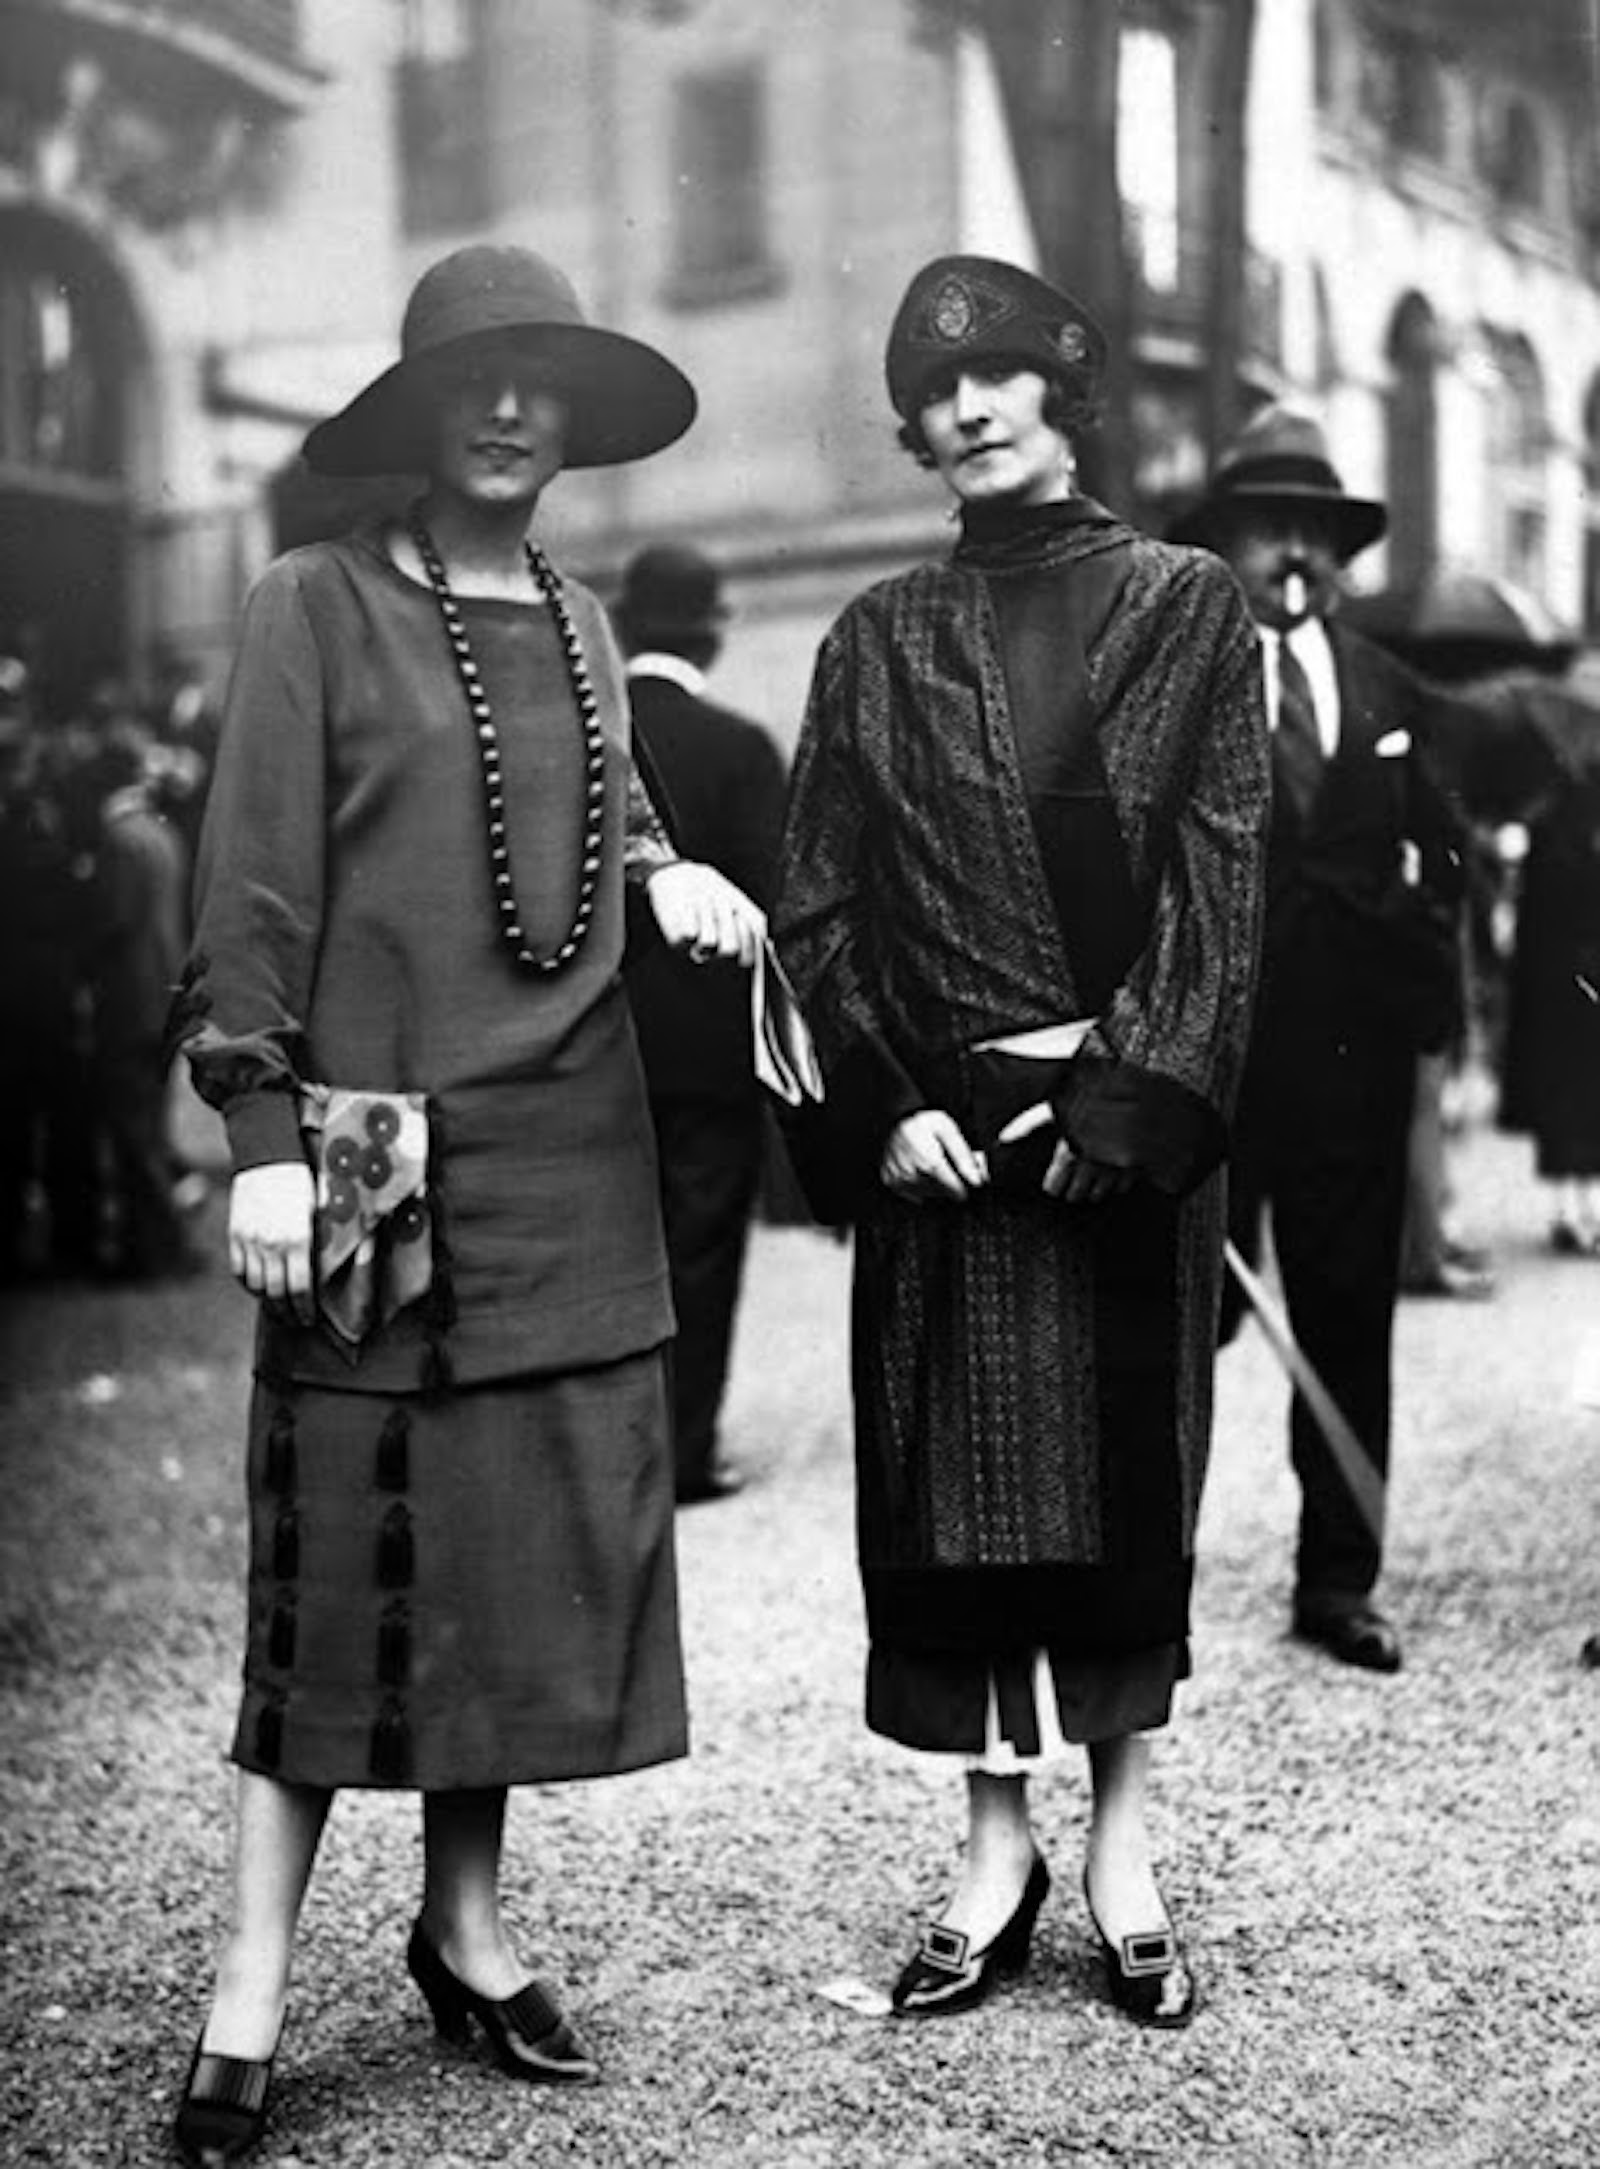 Фото 20х. Англия 1920е мода. 1920е мода в США. Мода Англия 20-е годы. 20е годы 20 века мода женщины.